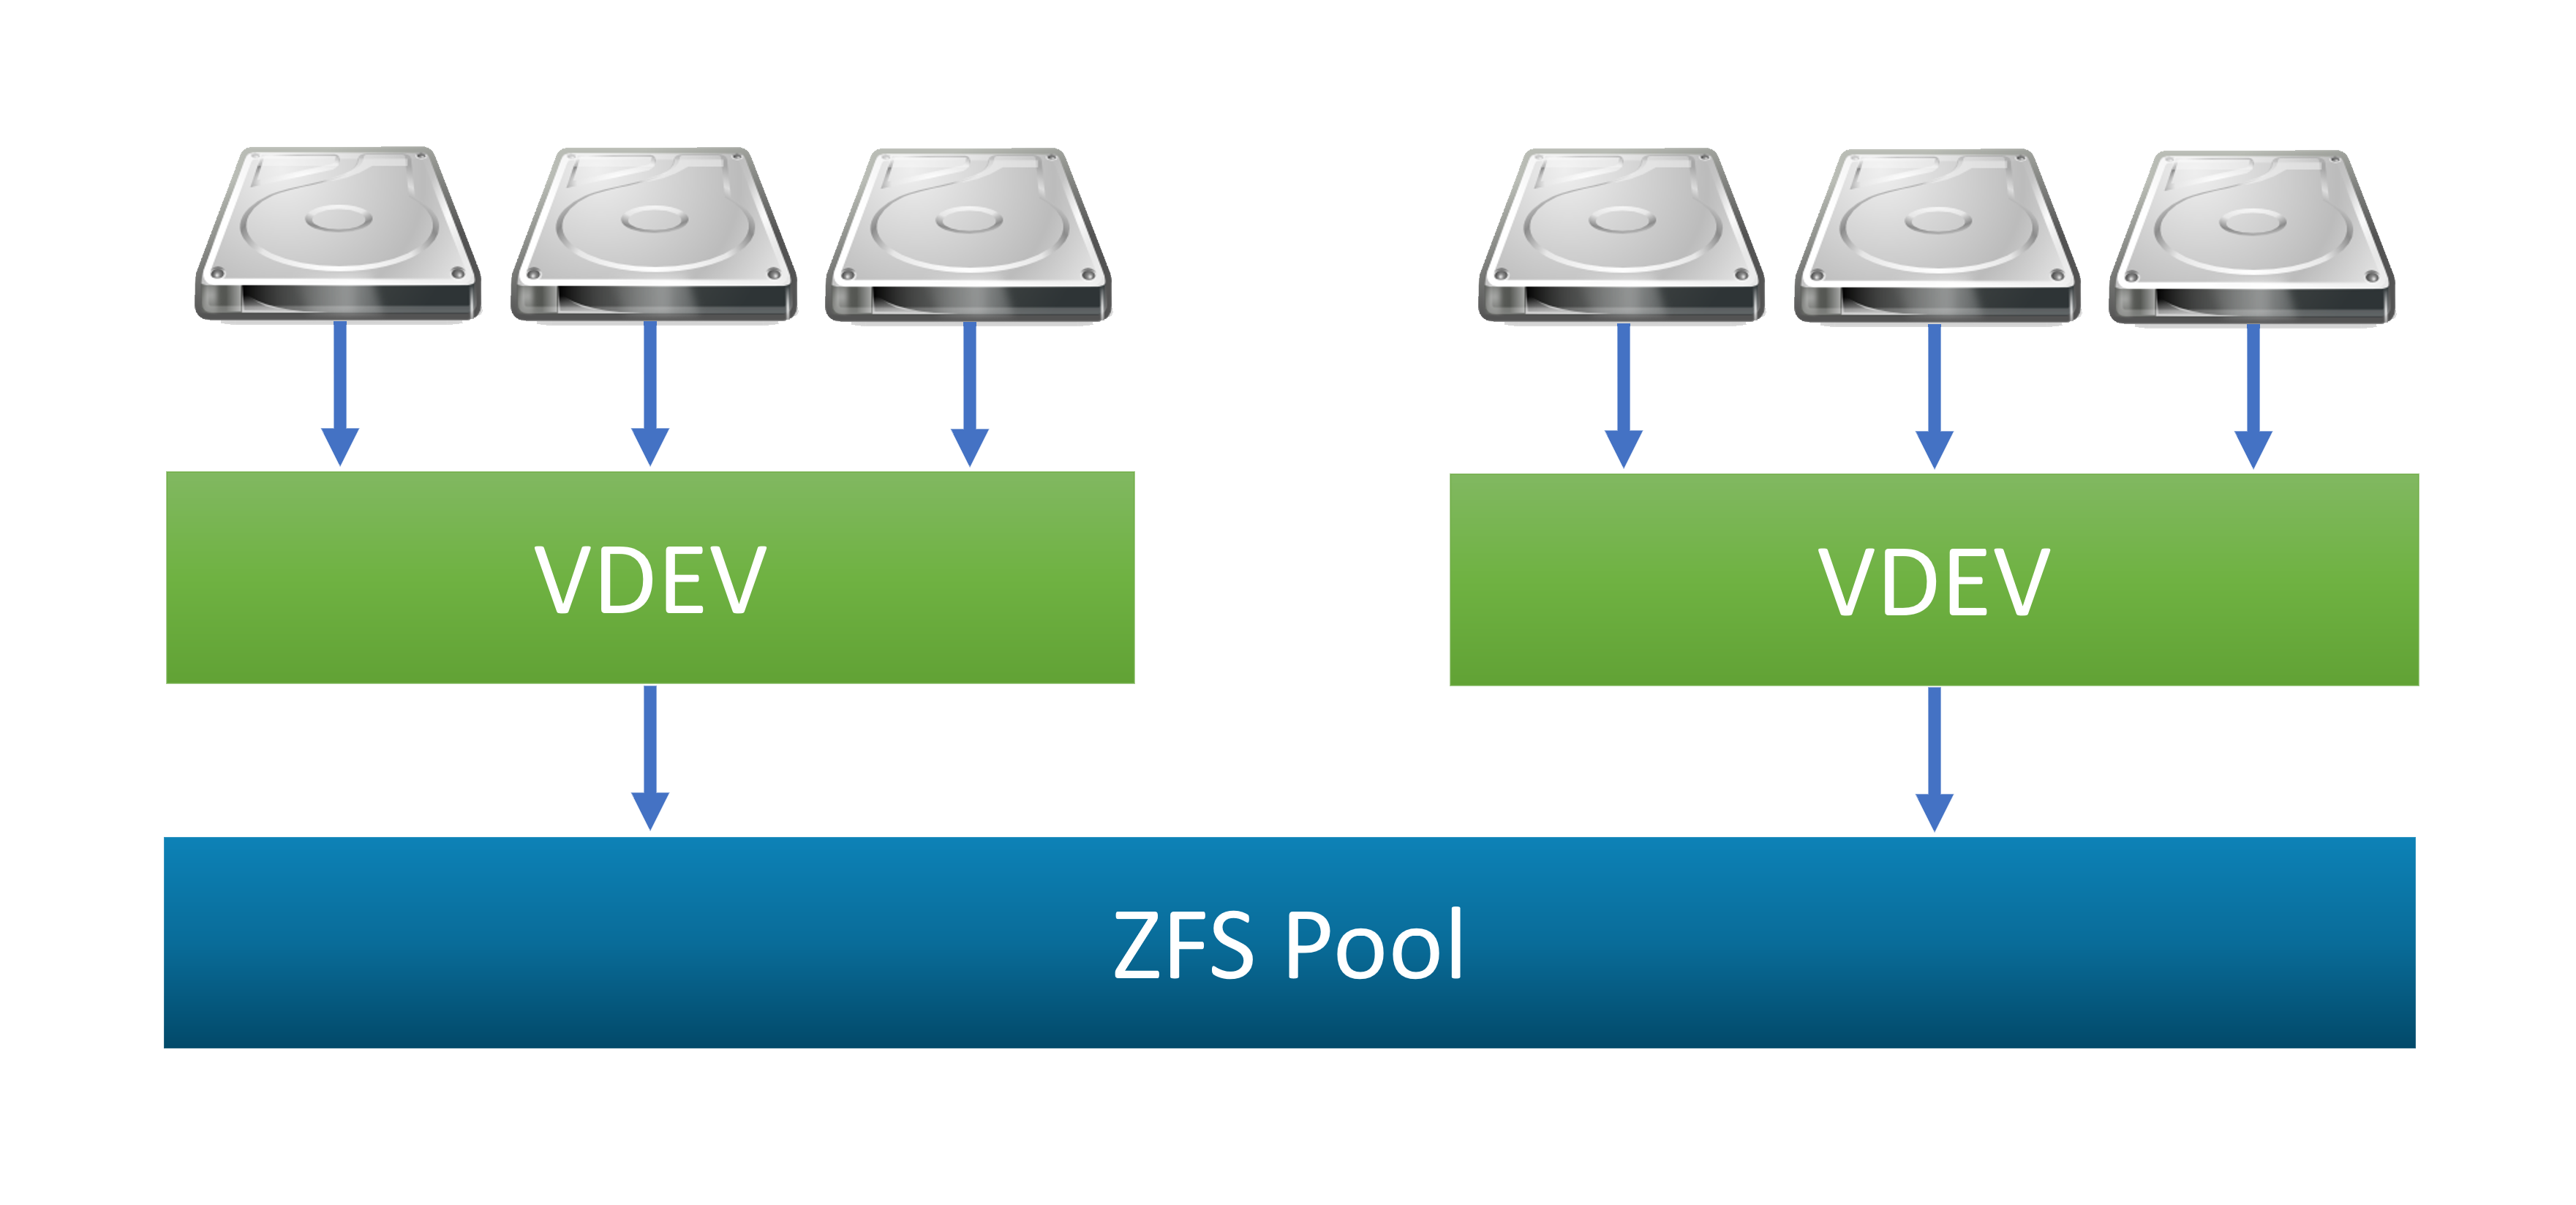 FreeNAS TrueNAS ZFS Pools RAIDZ RAIDZ2 RAIDZ3 Capacity, Integrity, and Performance - Computer & Server Infrastructure Builds - Lawrence Systems Forums